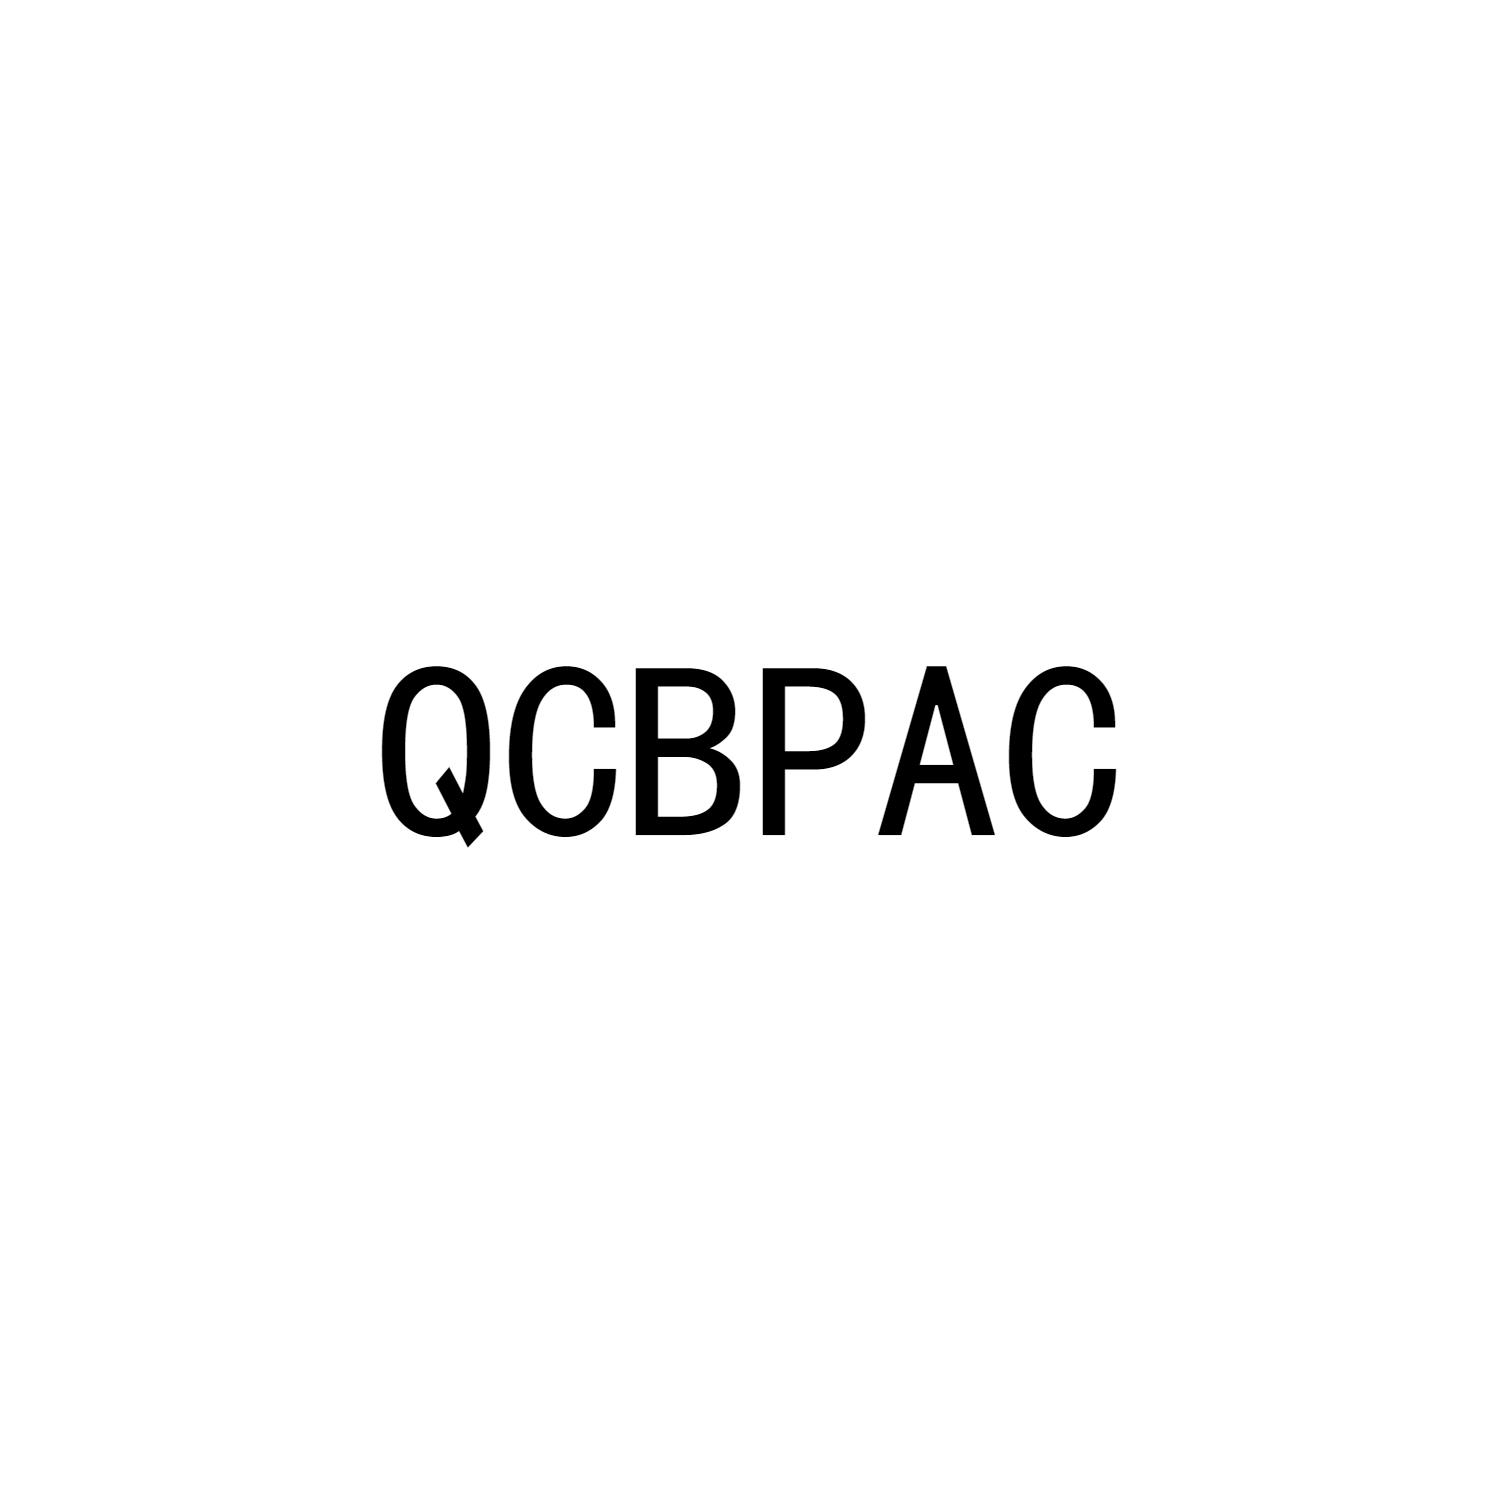 QCBPAC